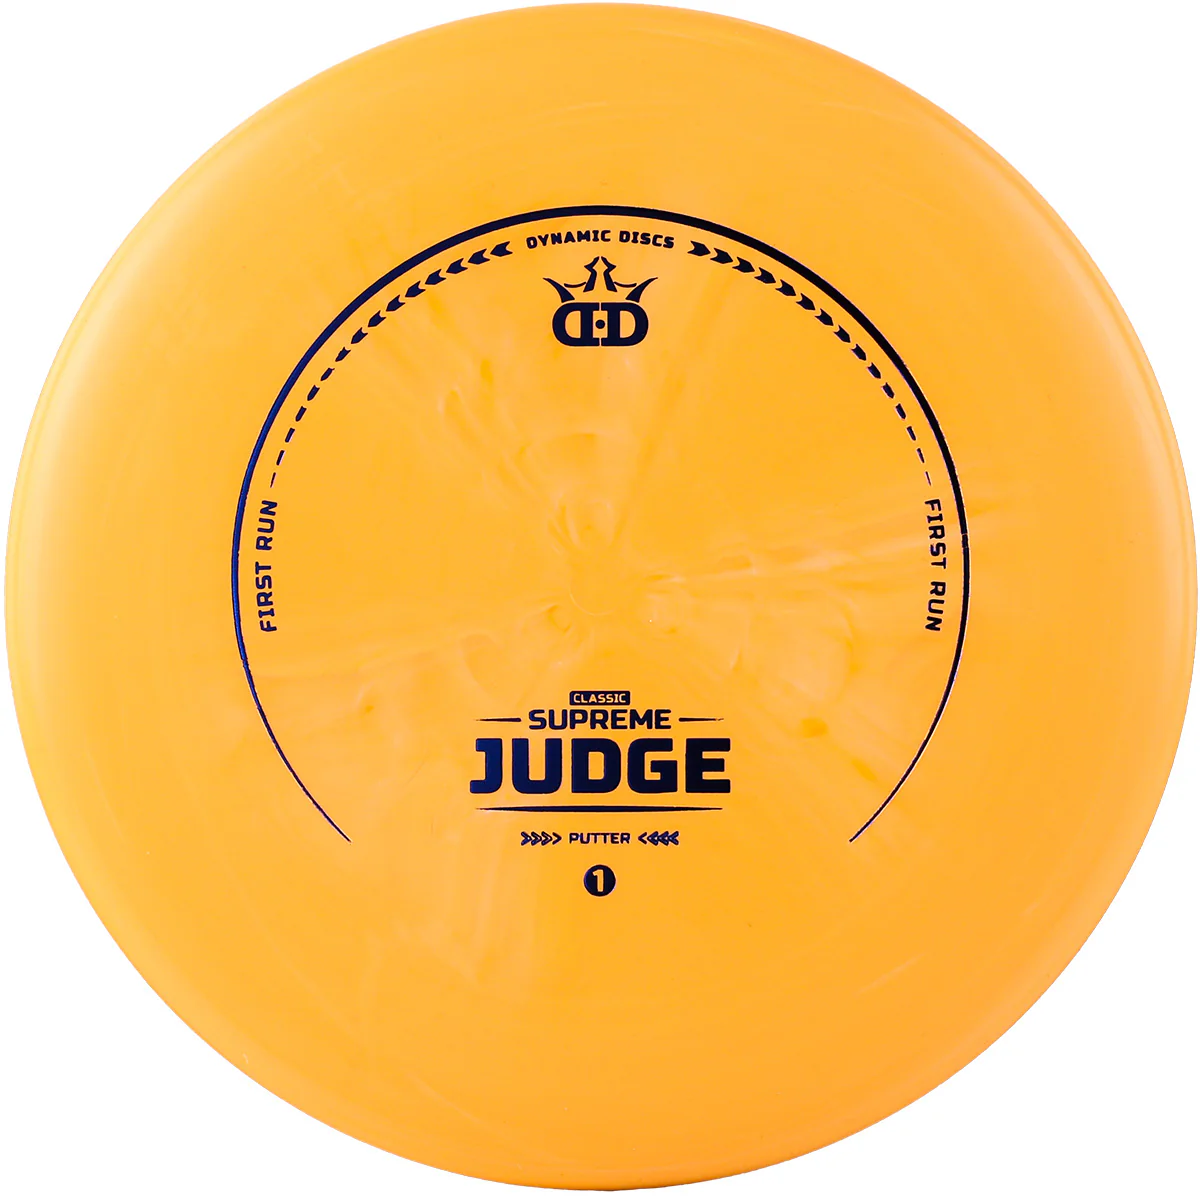 Dynamic Discs – Classic Supreme Judge